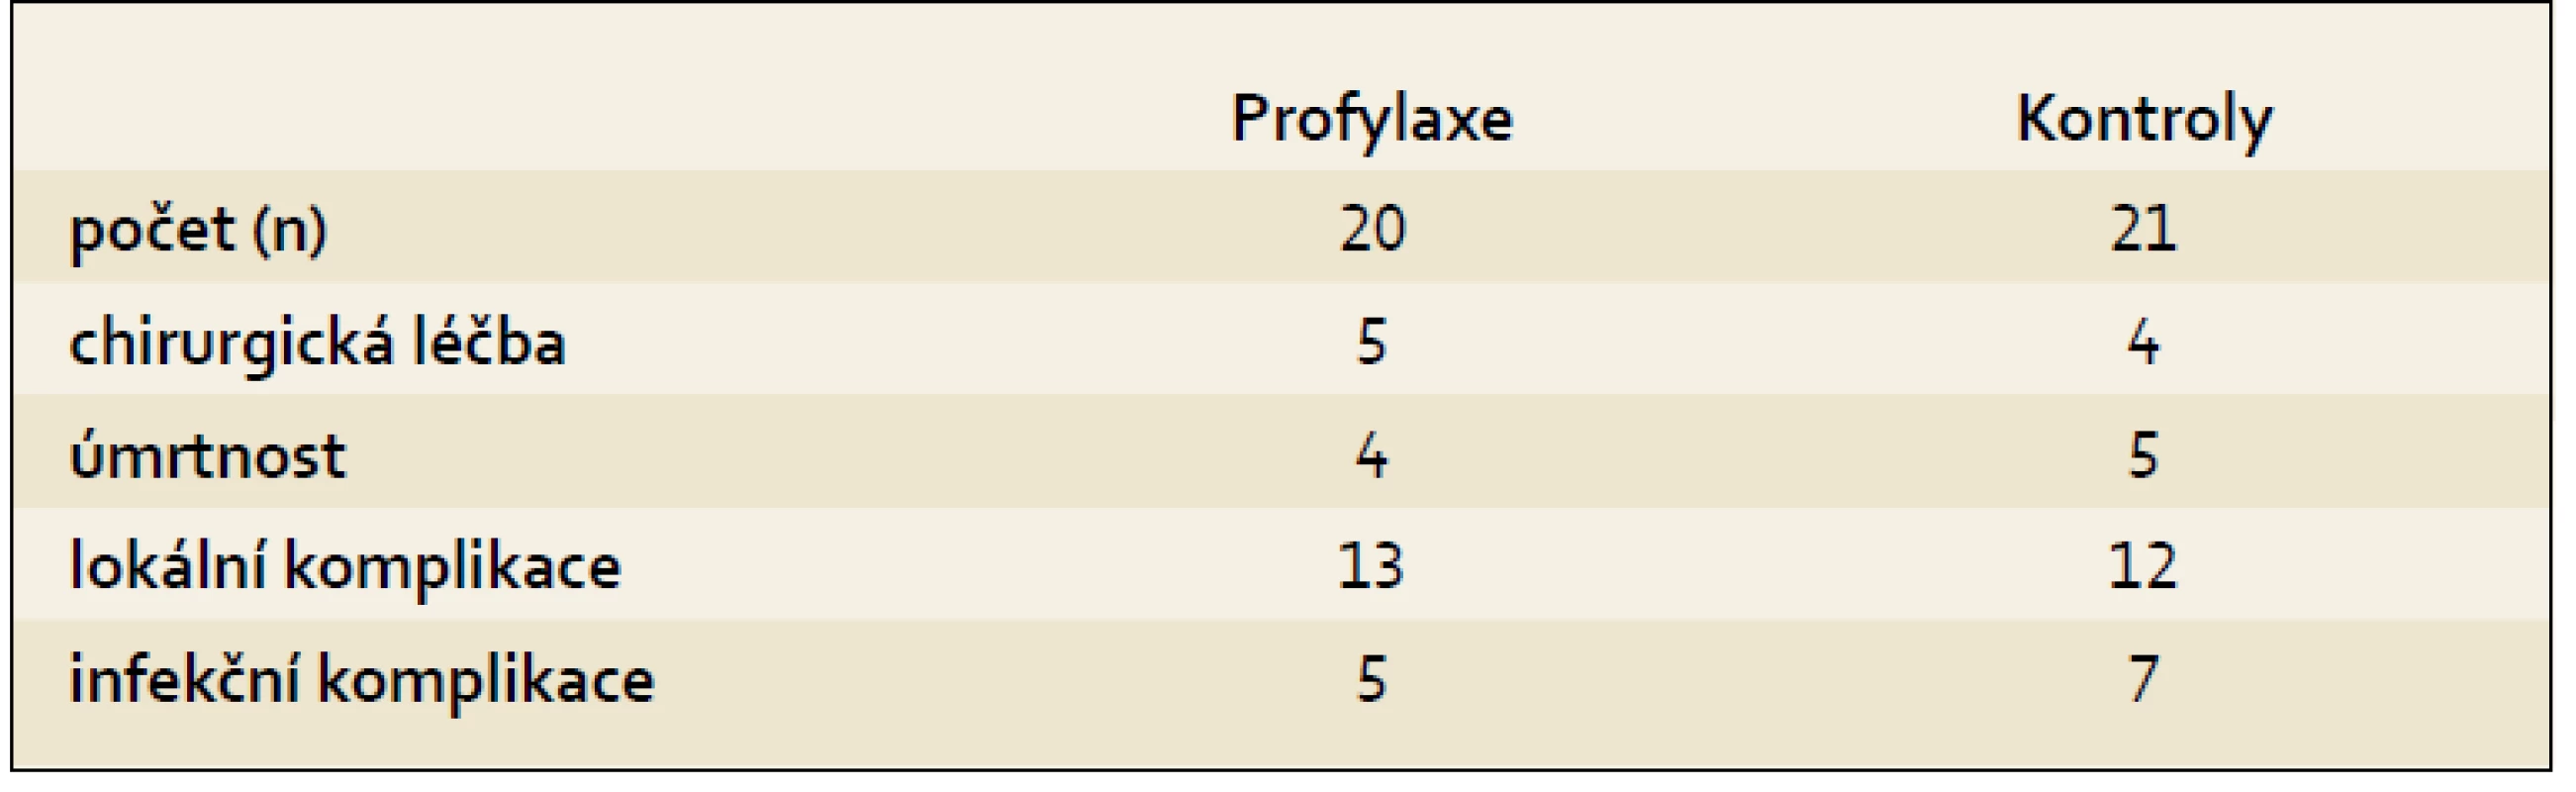 Profylaxe infekce u akutní pankreatitidy meropenemem.
Tab. 3. Infection prophylaxis in patients with acute pancreatitis using meropenem.